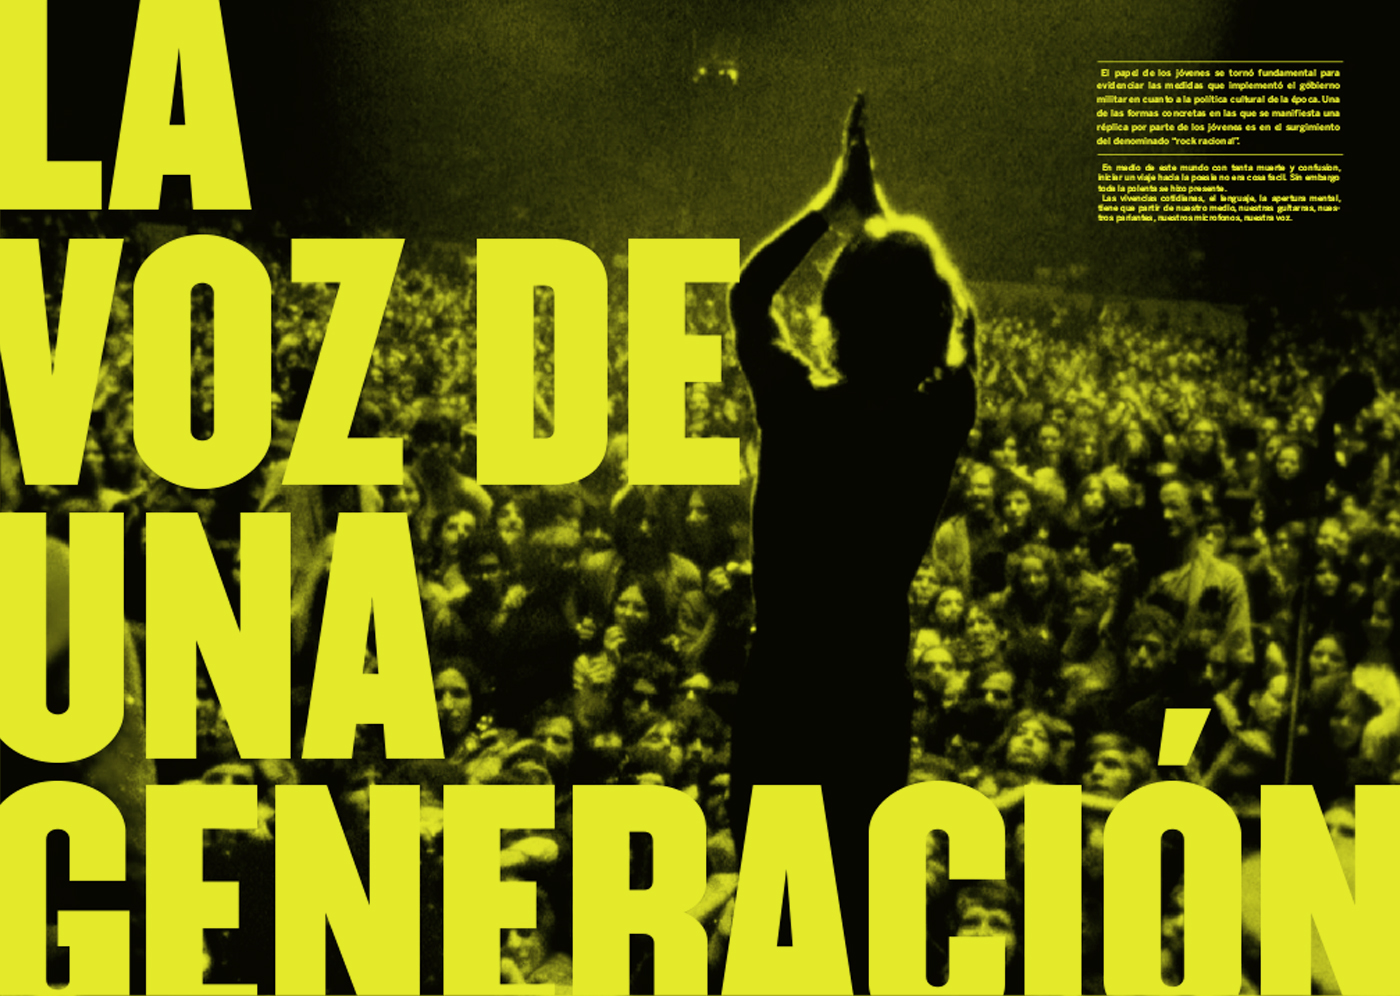 editorial magazine revista newspaper design Gabriele fadu uba dictadura argentina